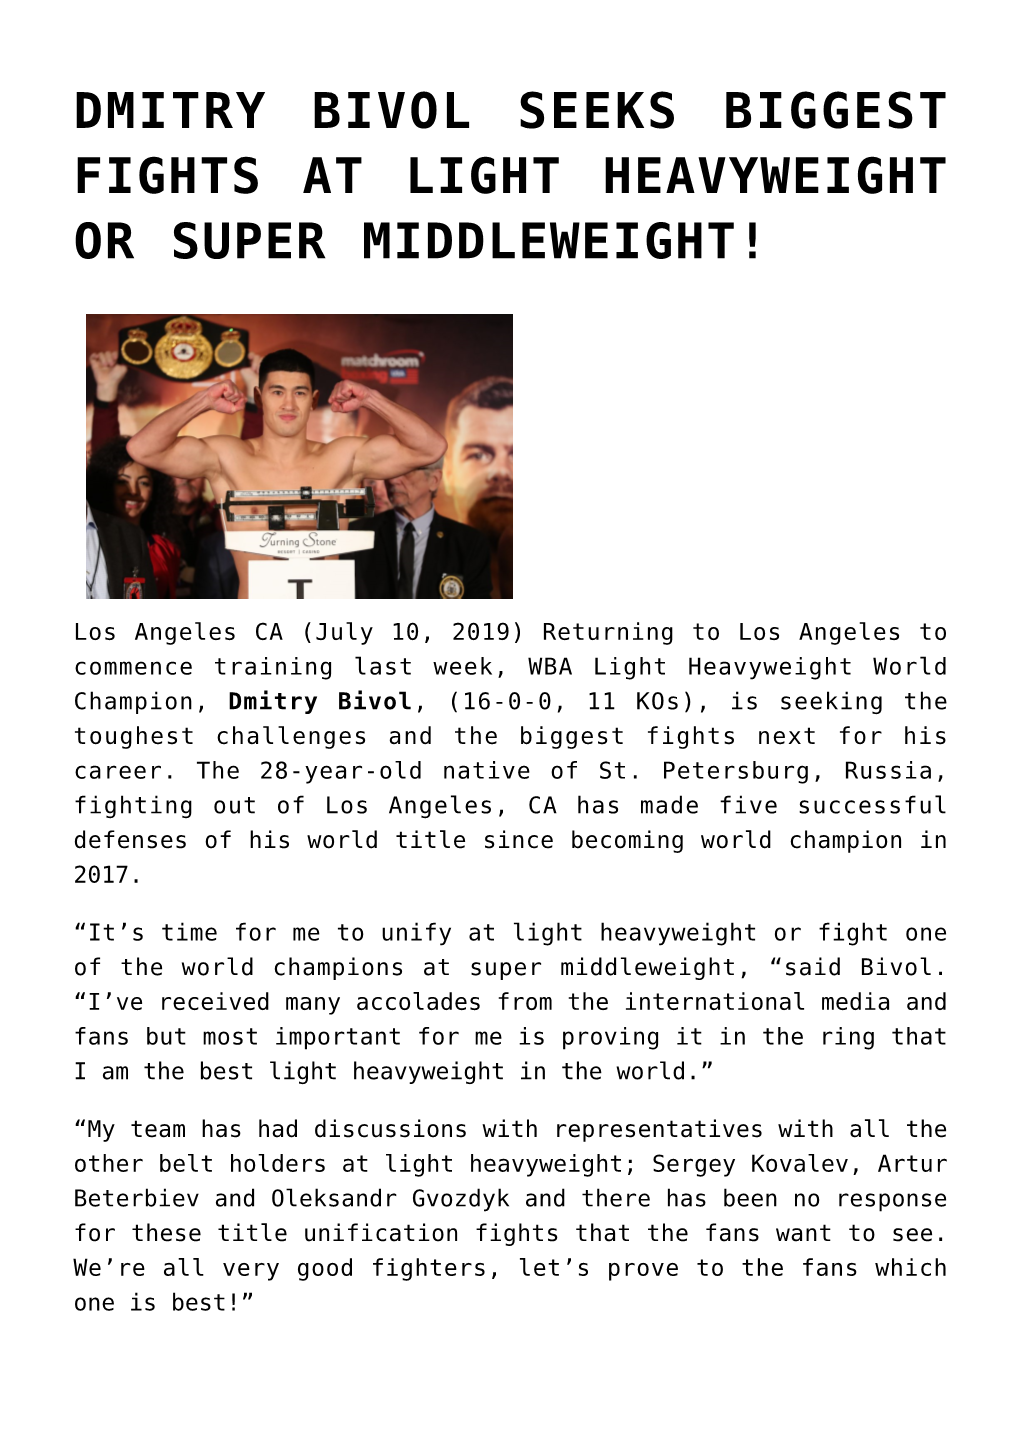 Dmitry Bivol Seeks Biggest Fights at Light Heavyweight Or Super Middleweight!